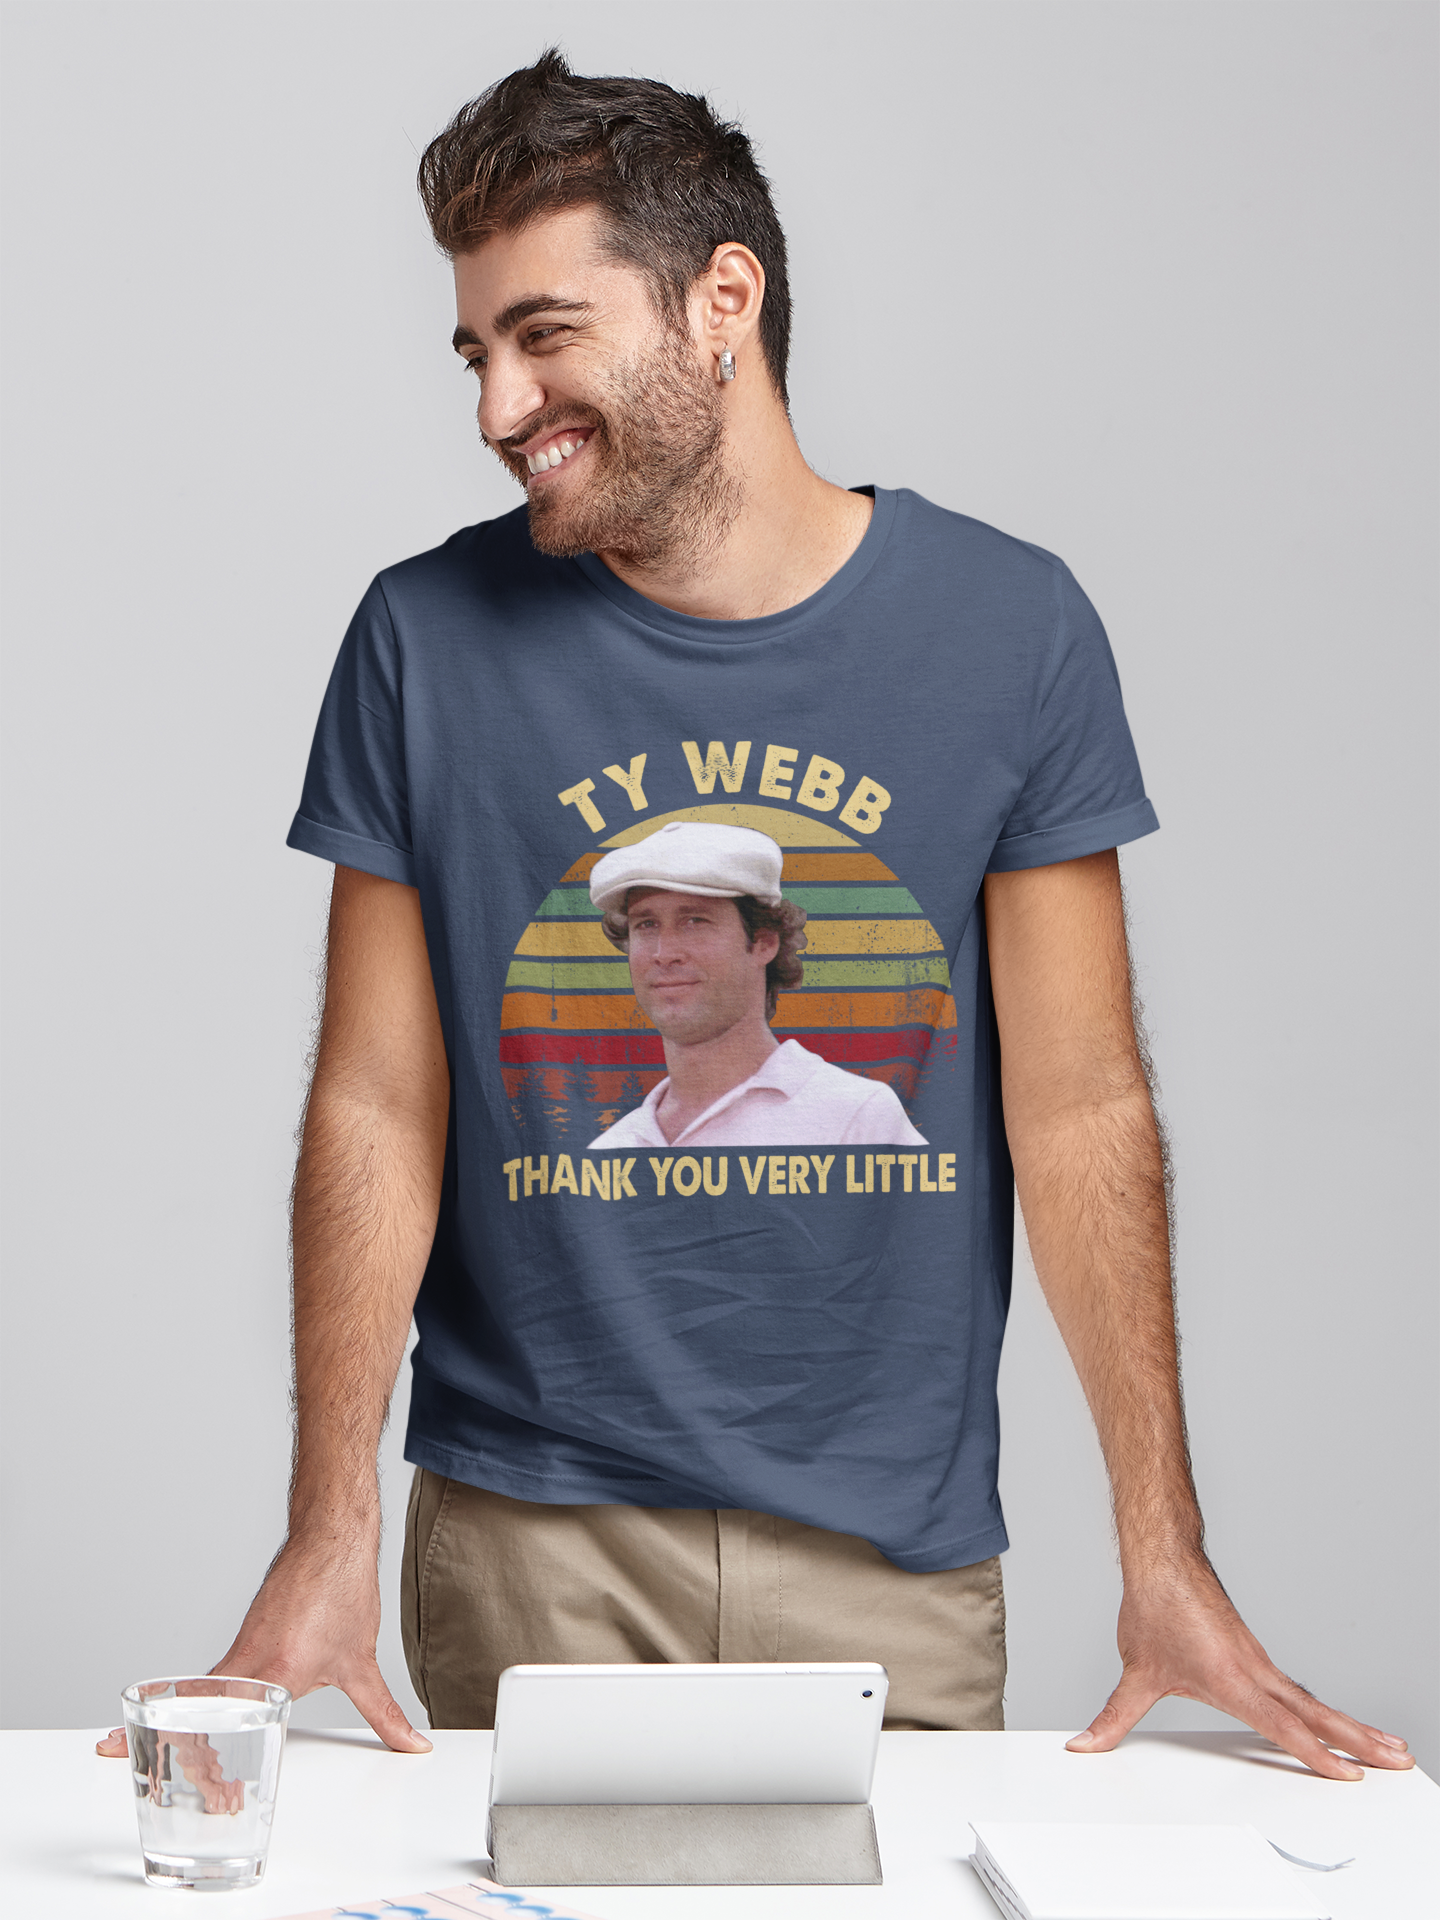 Caddyshack Movie T Shirt, Ty Webb T Shirt, Ty Webb Thank You Very Little Tshirt